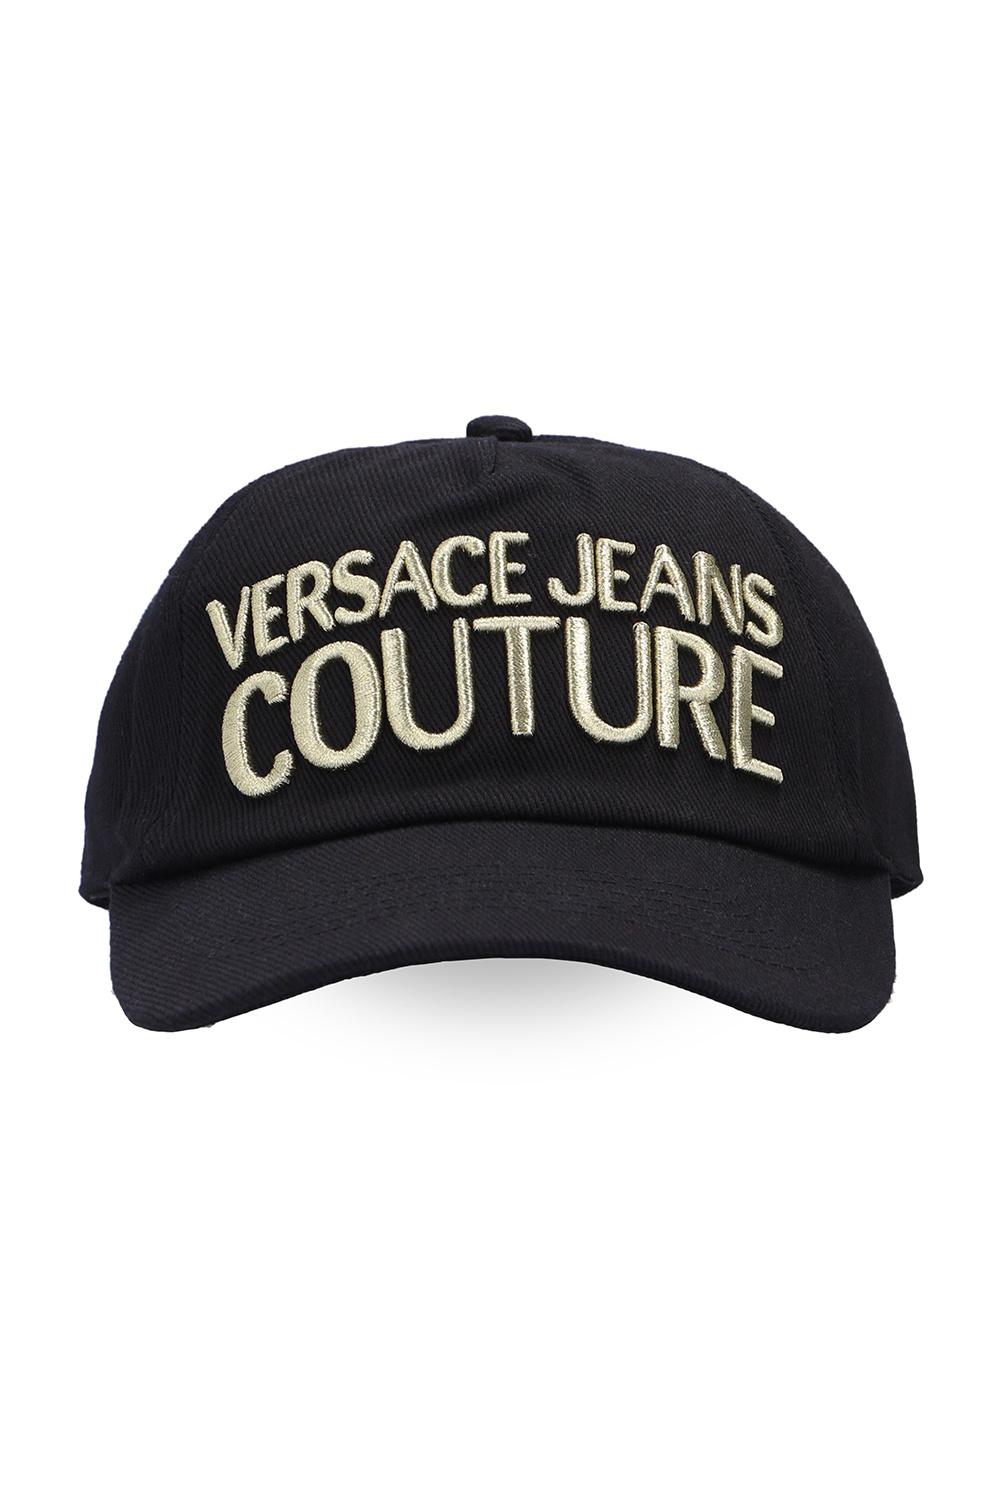 Versace Jeans Couture Men's Bullzerk Patched Cotton Adjustable Hat